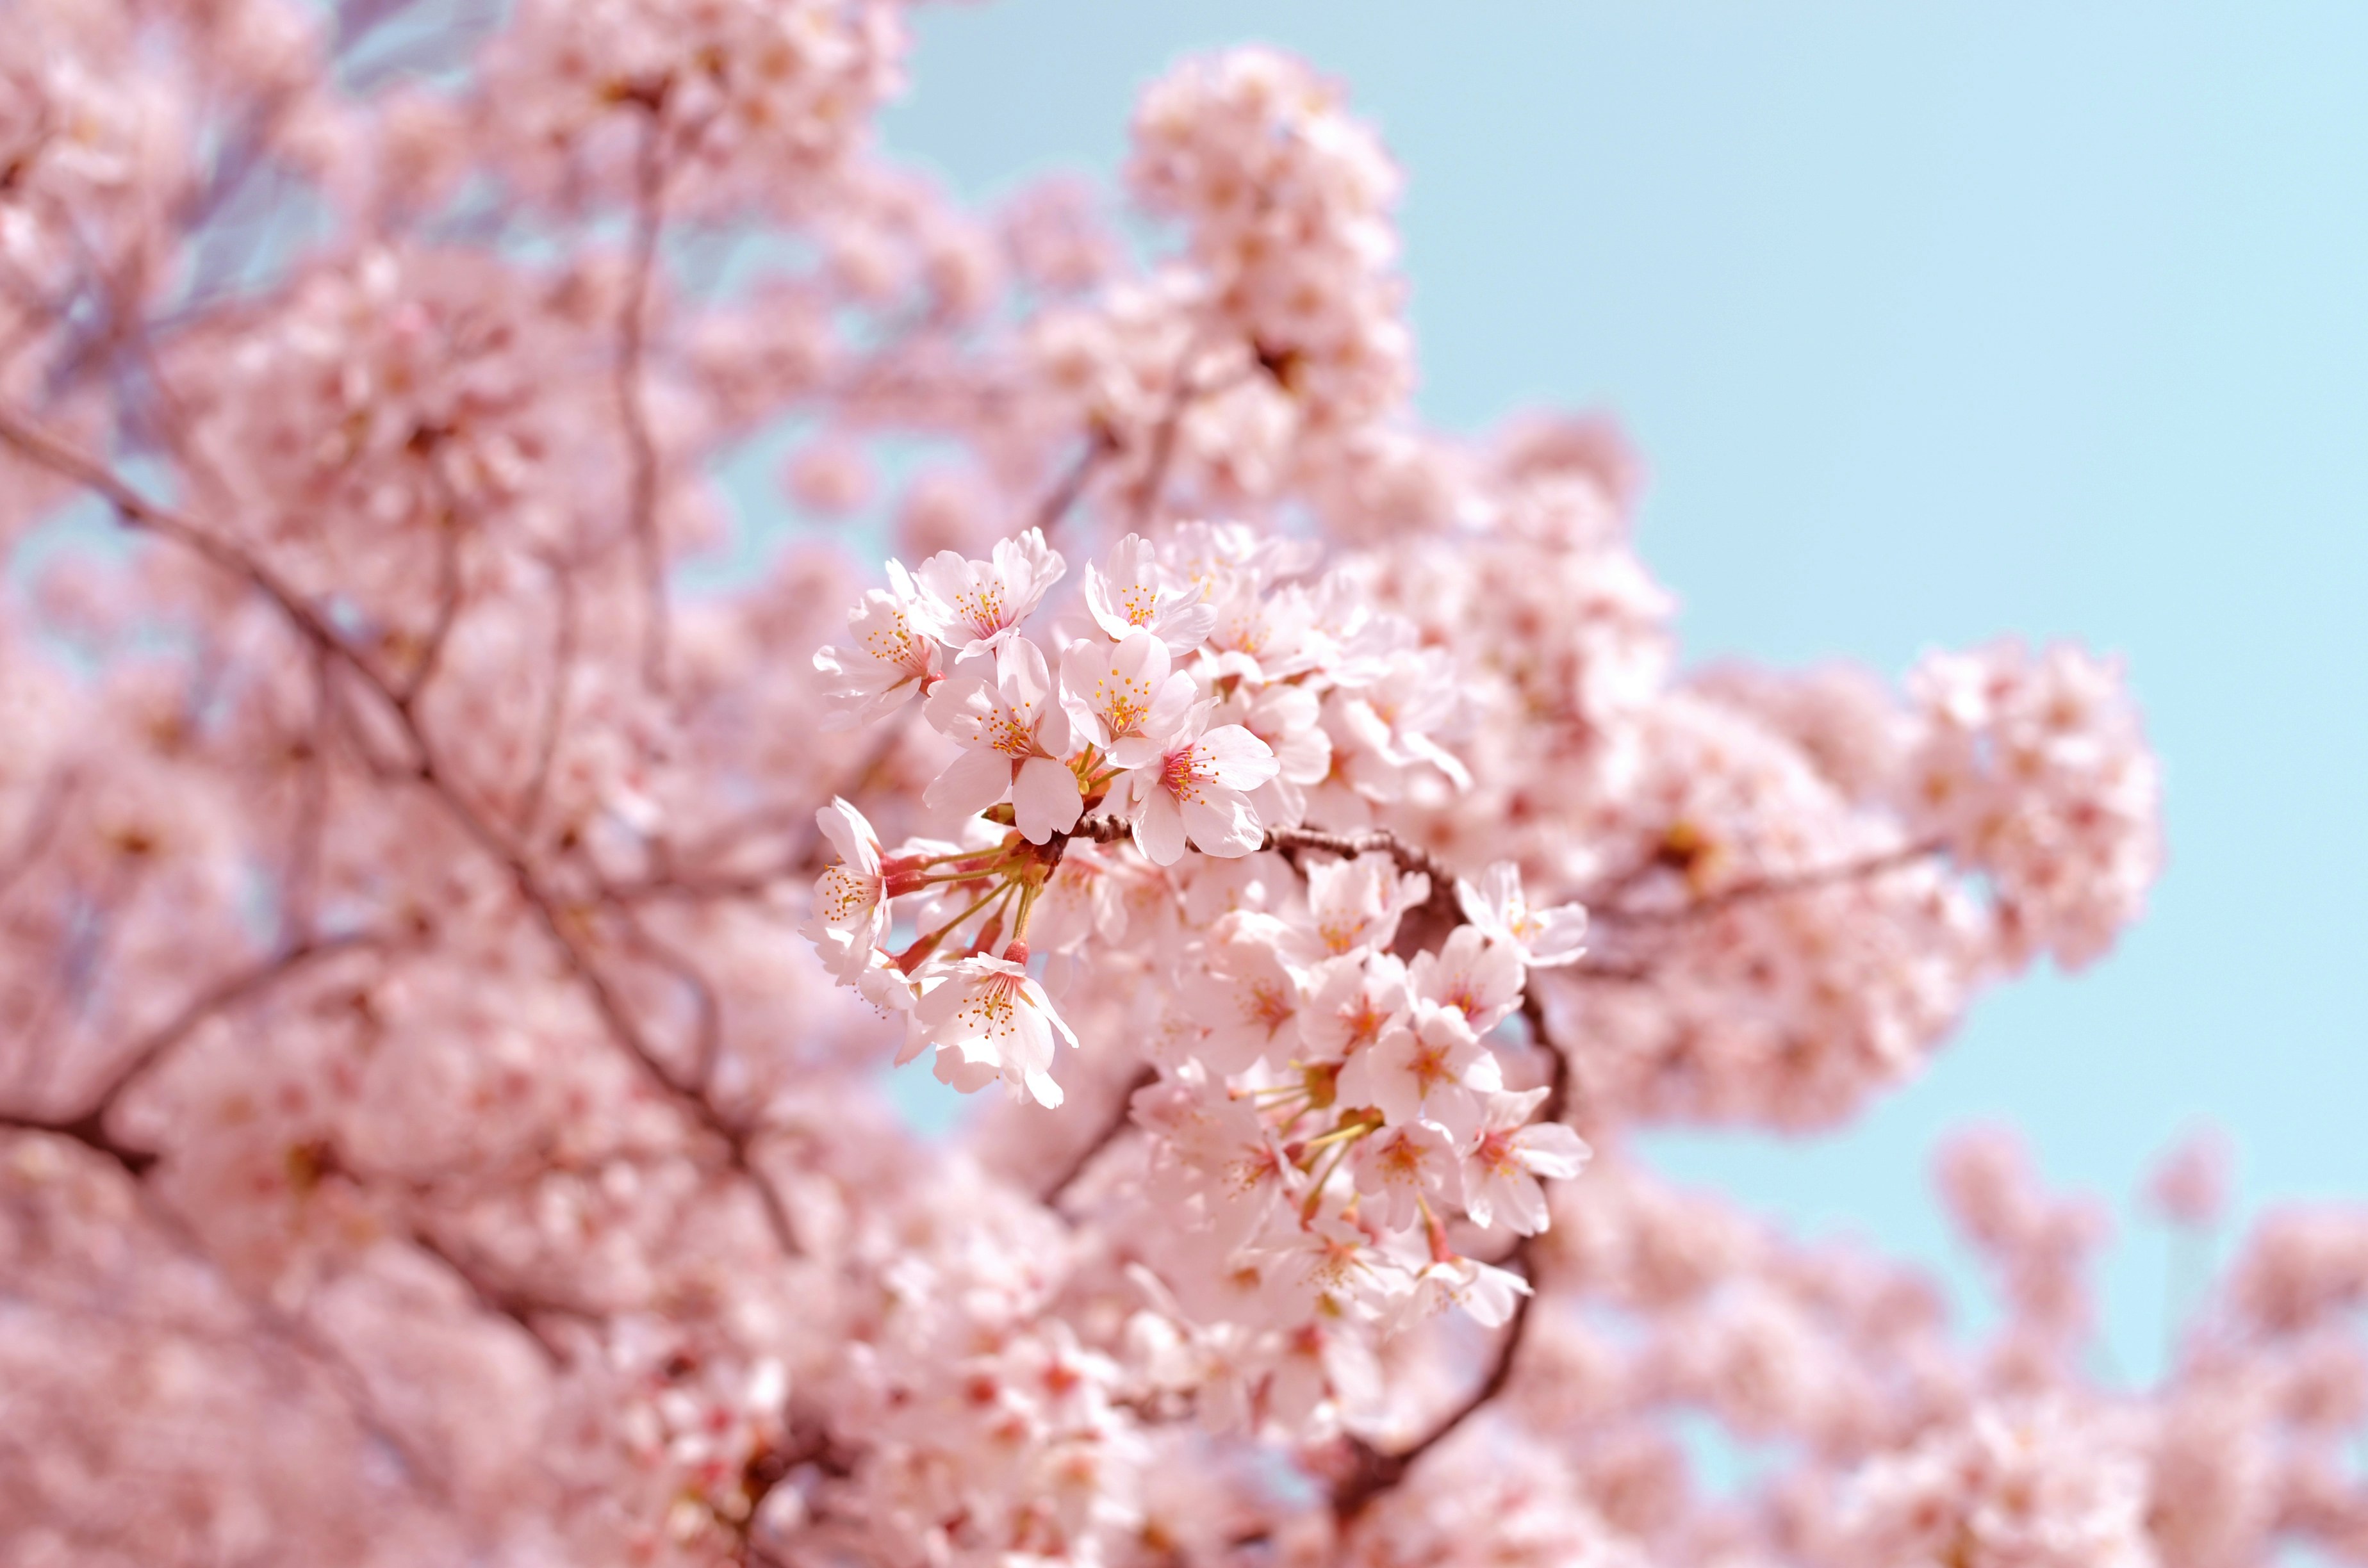 Featured image of post Cherry Blossom Anime Wallpaper Hd Standard 4 3 5 4 3 2 fullscreen uxga xga svga qsxga sxga dvga hvga hqvga